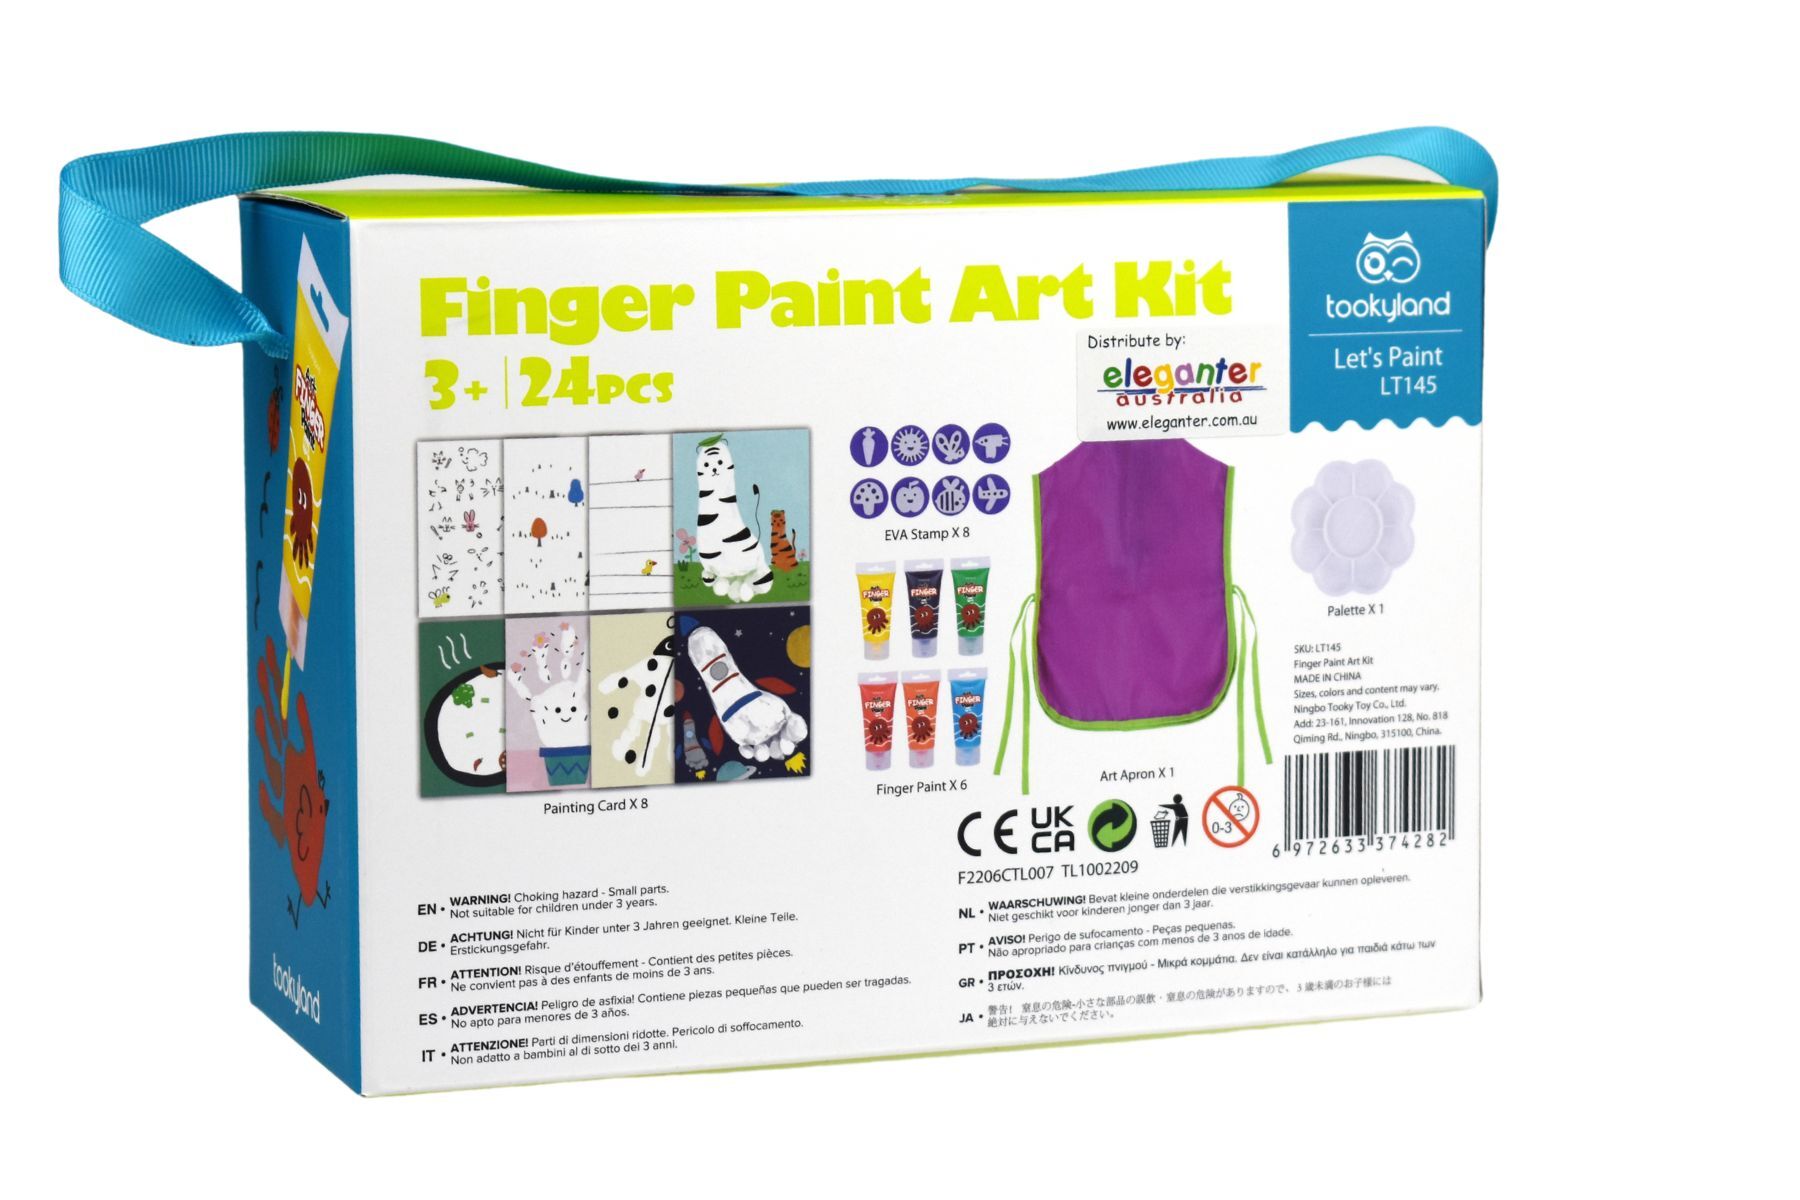 Complete Finger Paint Kit for Budding Artists